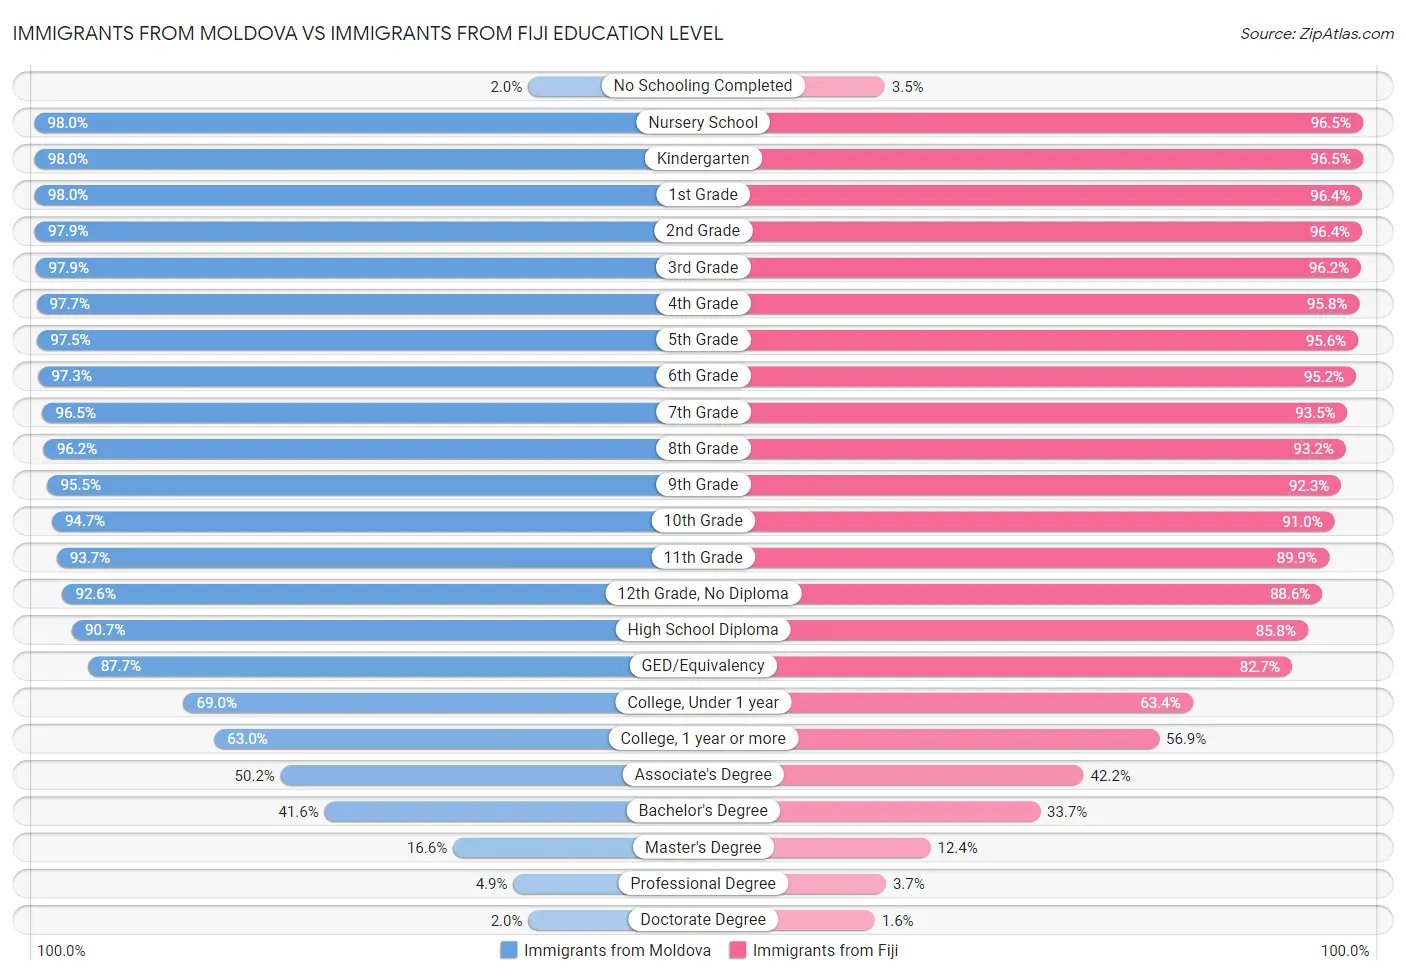 Immigrants from Moldova vs Immigrants from Fiji Education Level